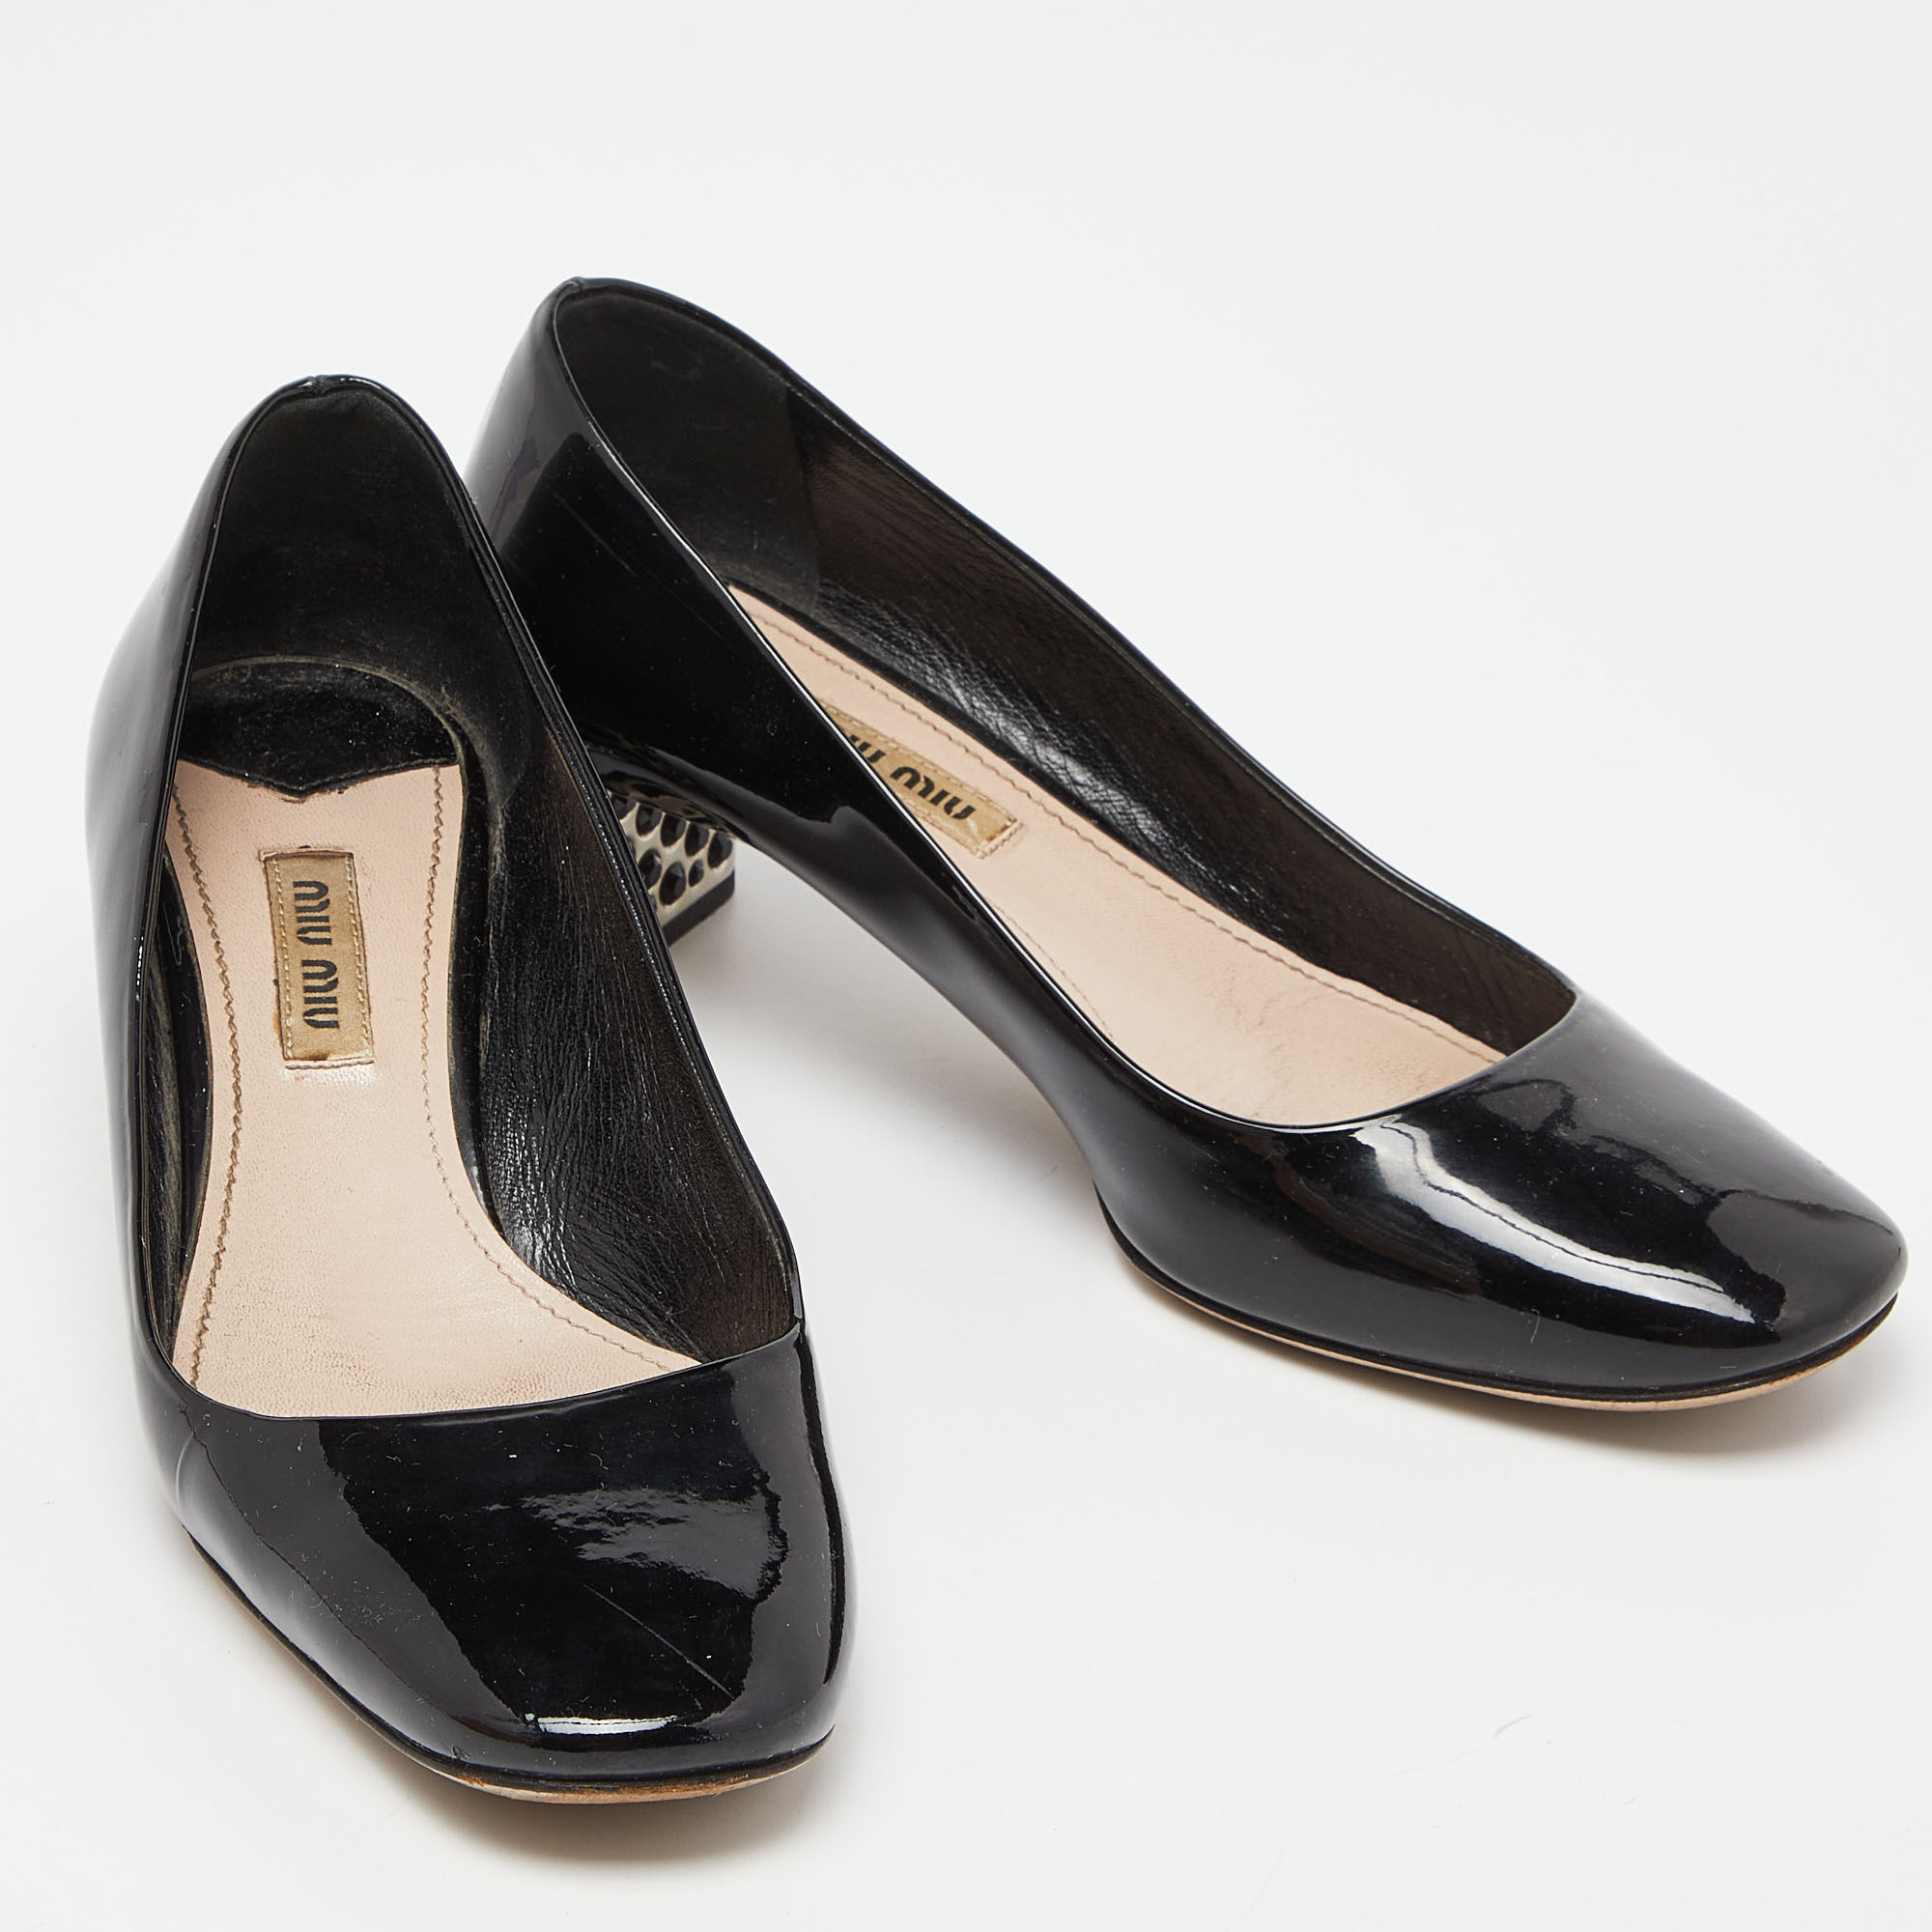 Miu Miu Black Patent Leather Crystal Embellished Block Heel Pumps Size 36.5